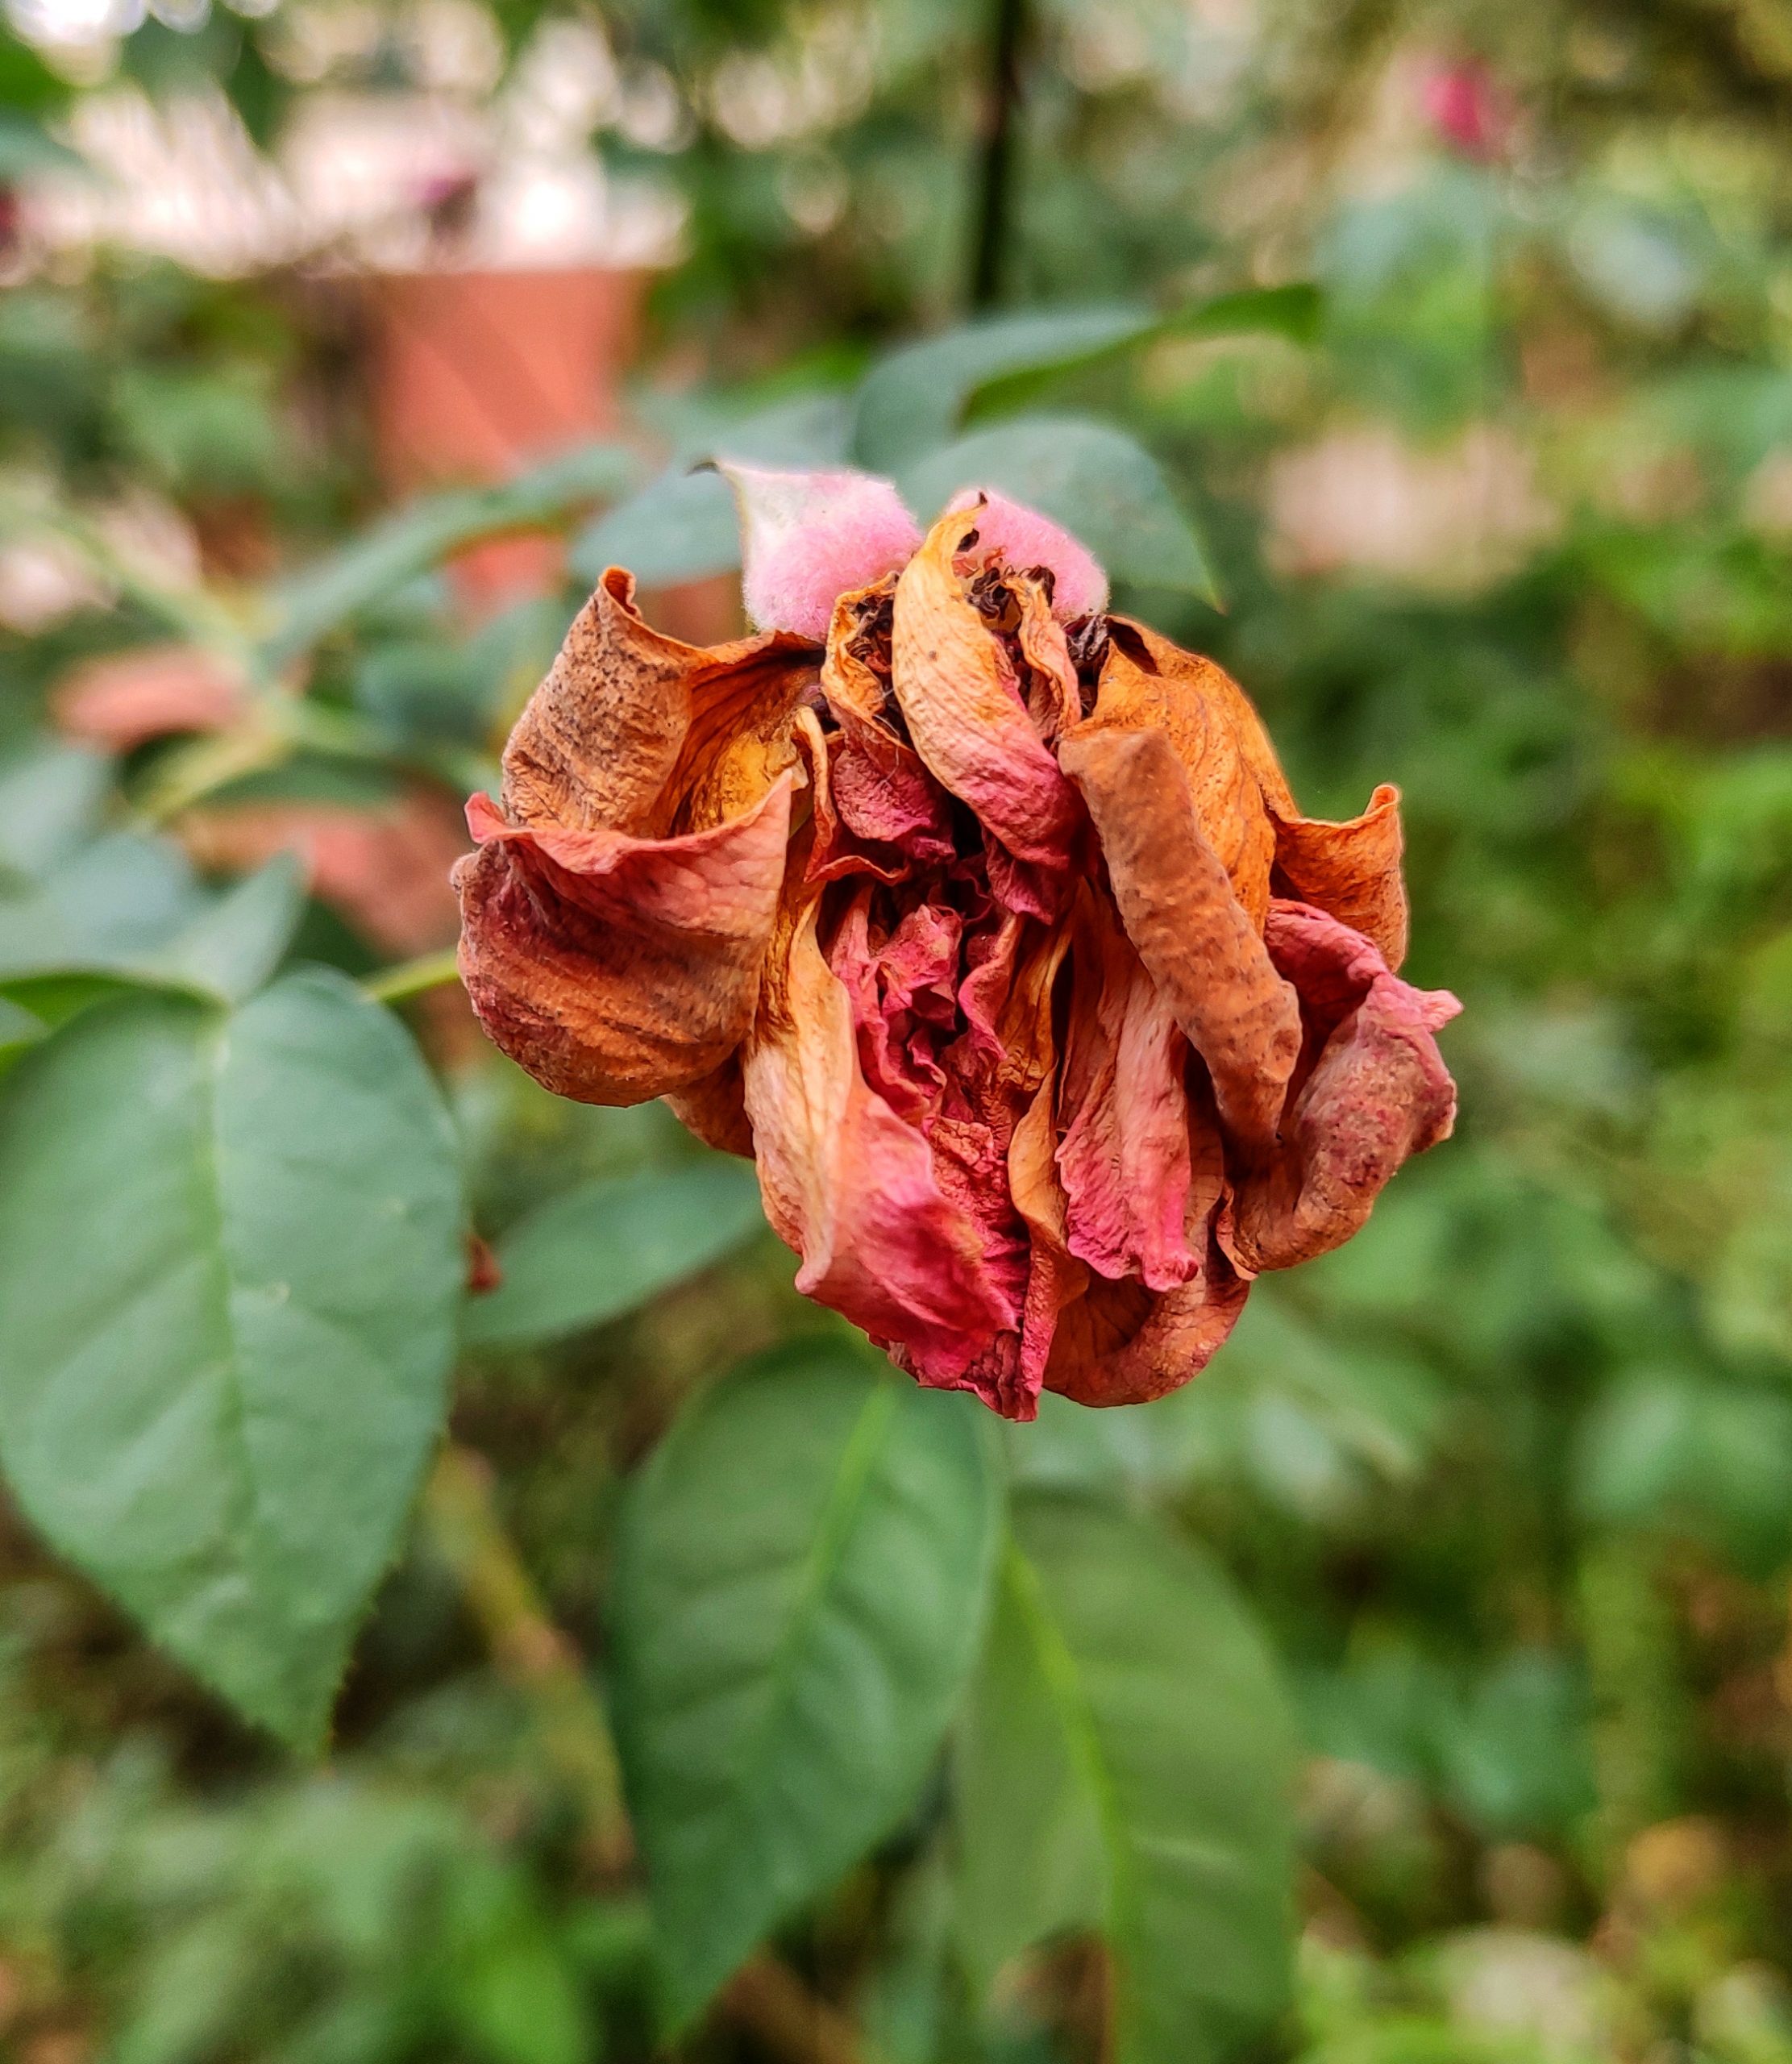 A dry rose